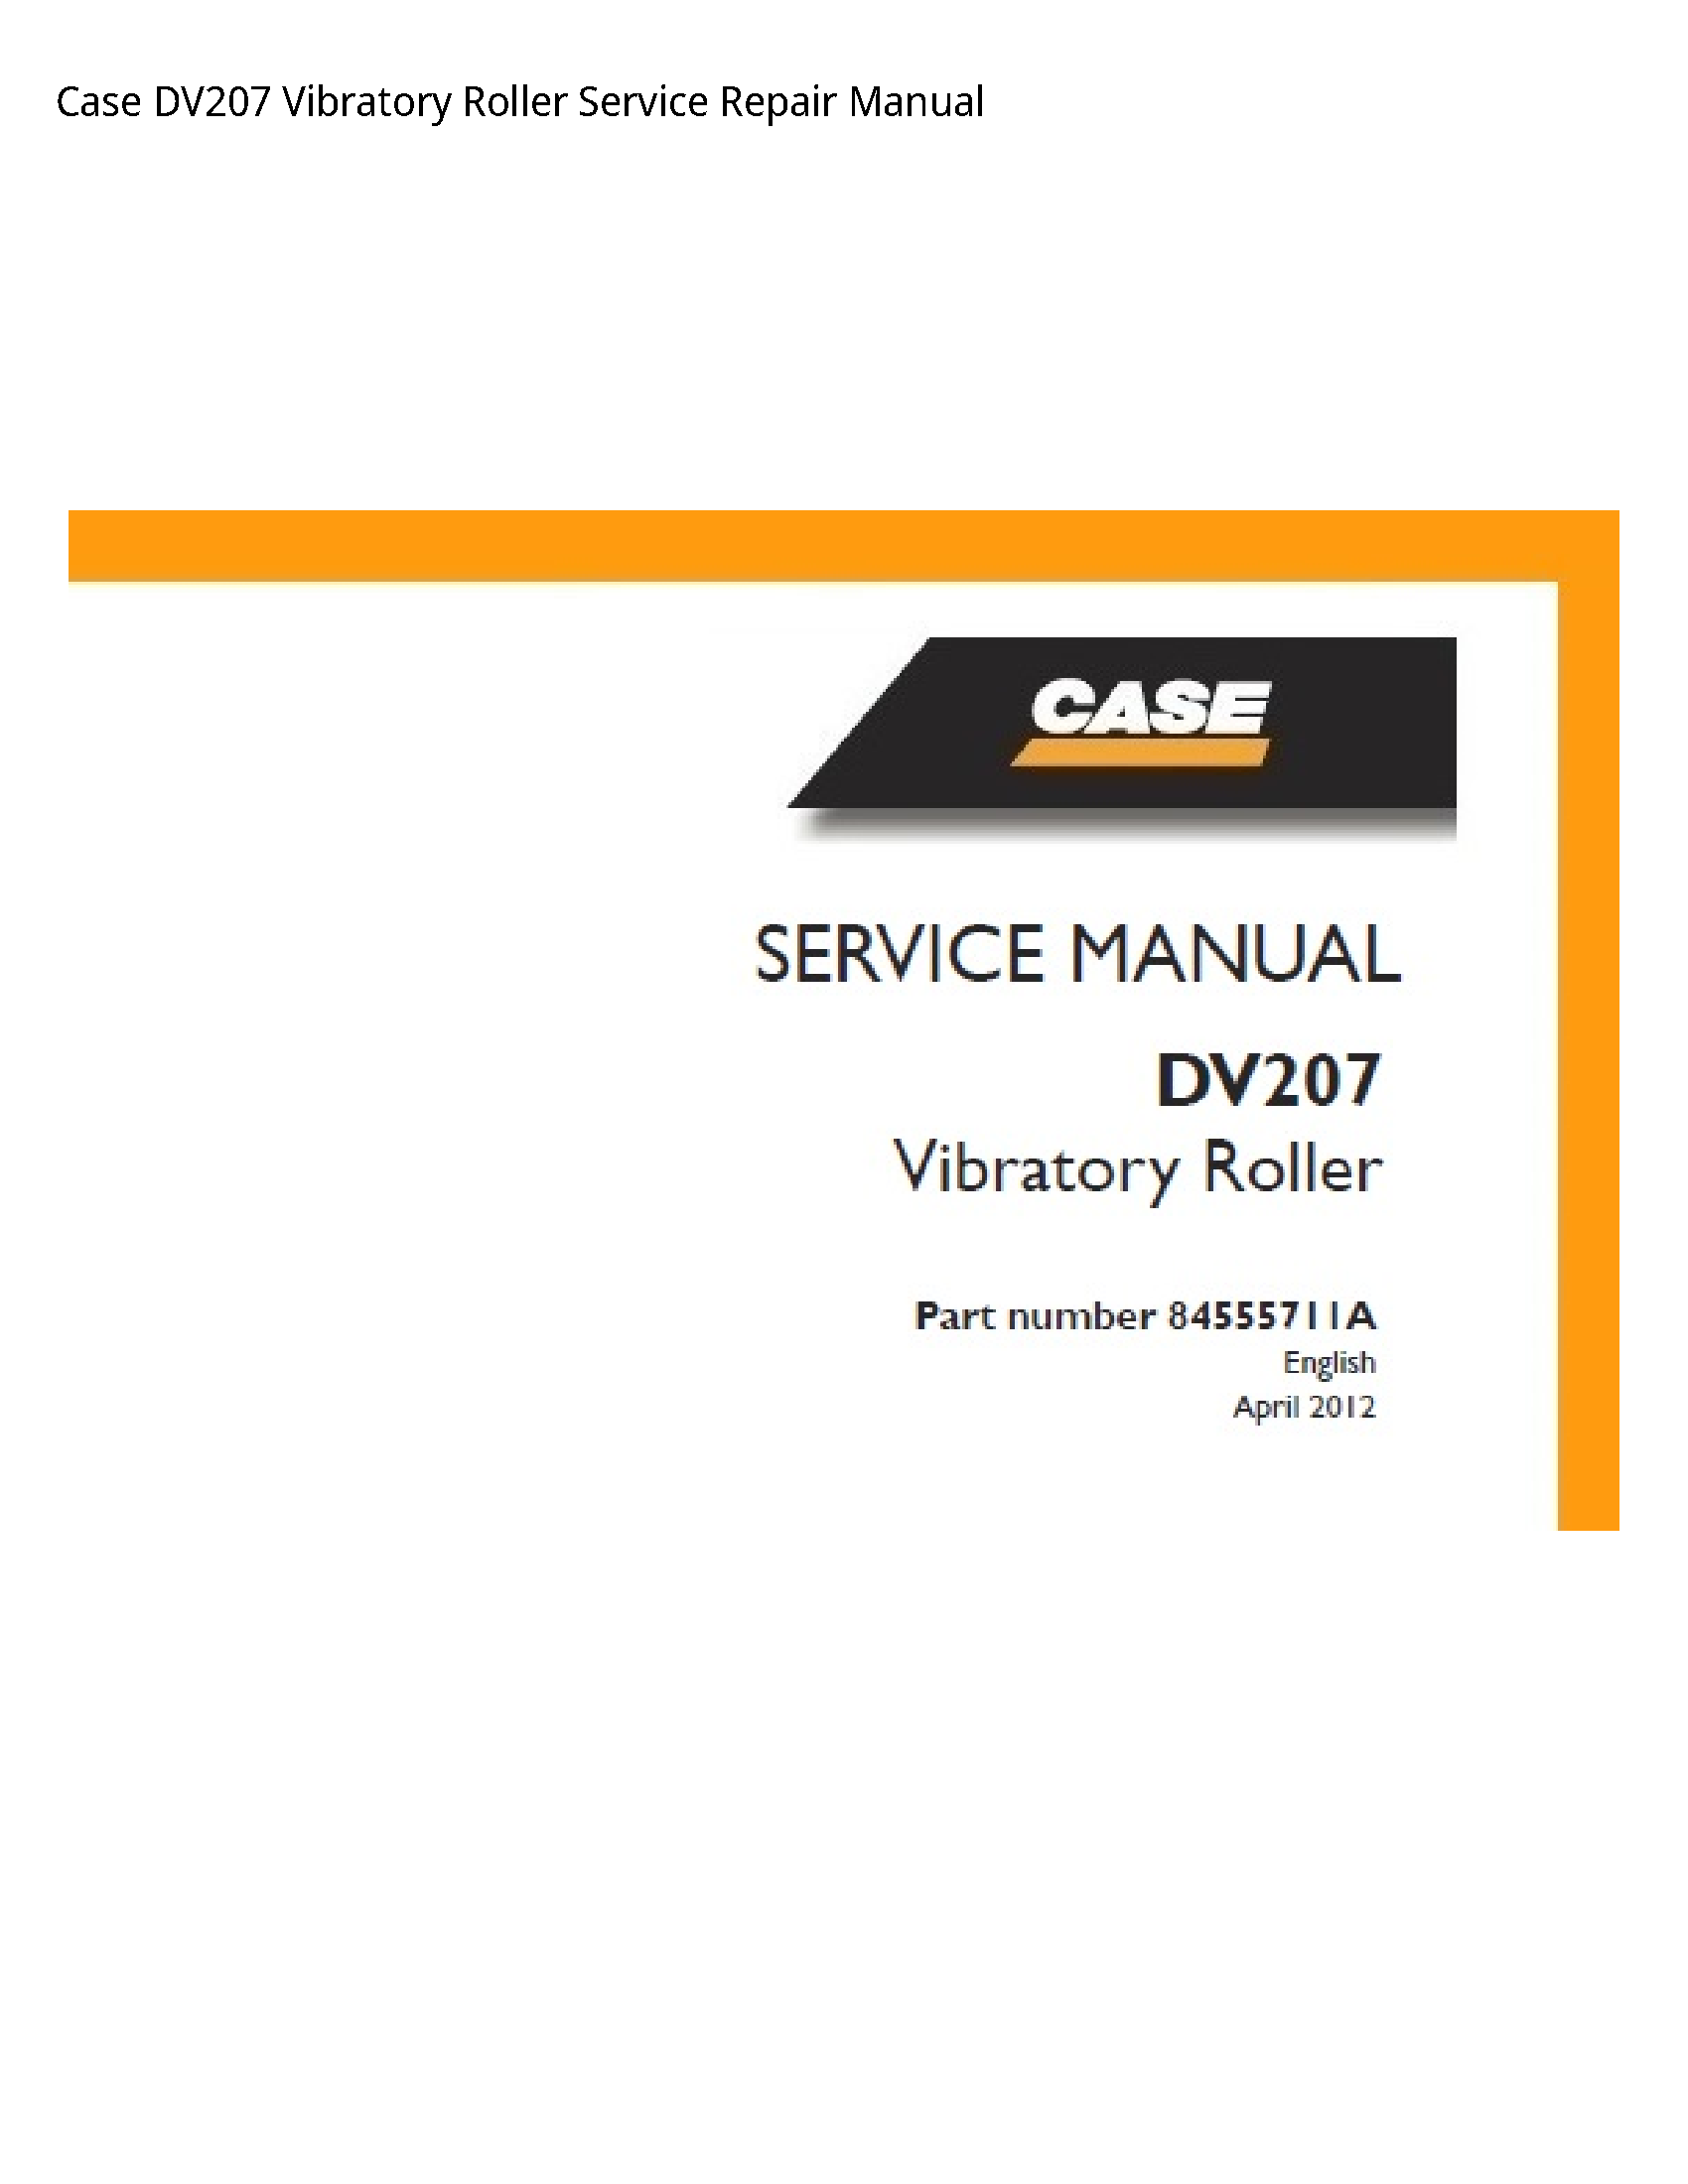 Case/Case IH DV207 Vibratory Roller manual